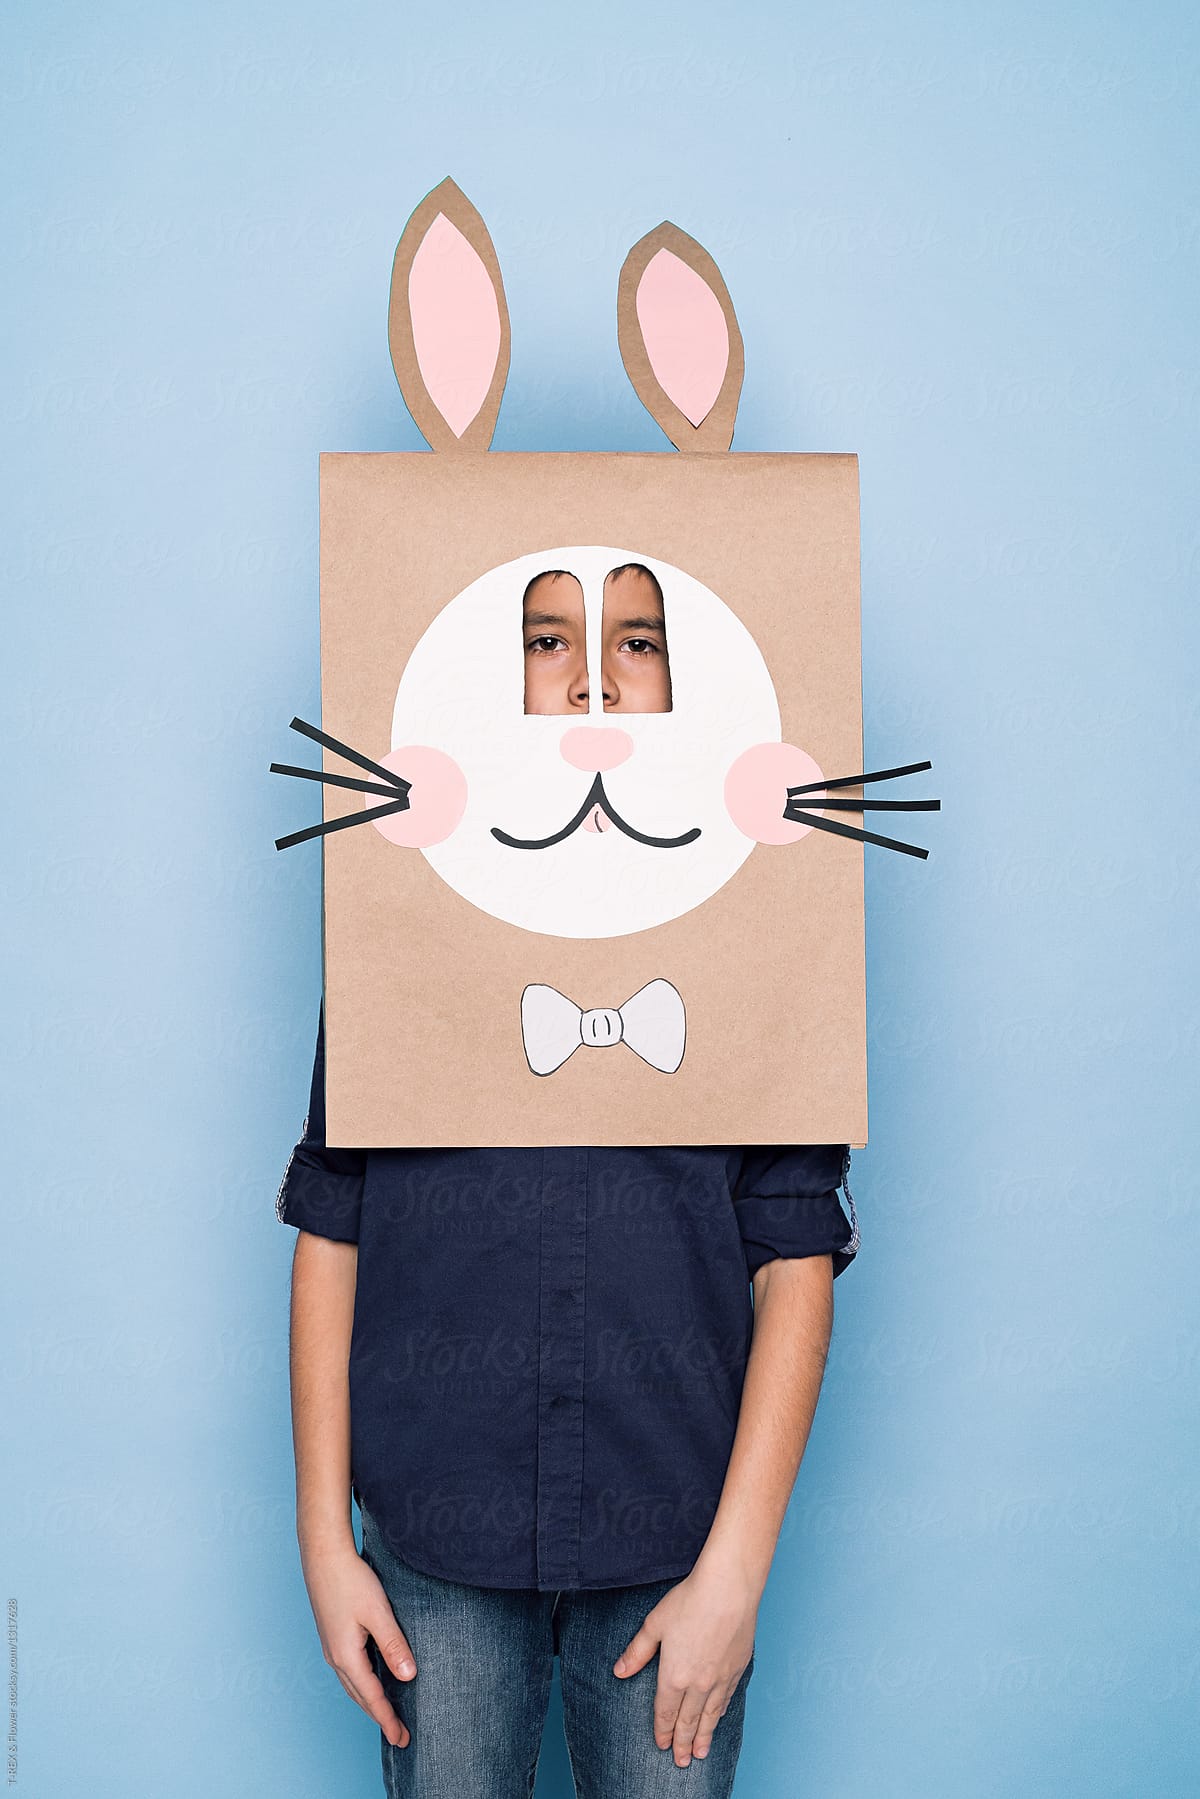 A Kid In Bunny Paper Mask" Stocksy Contributor "Danil Nevsky" -